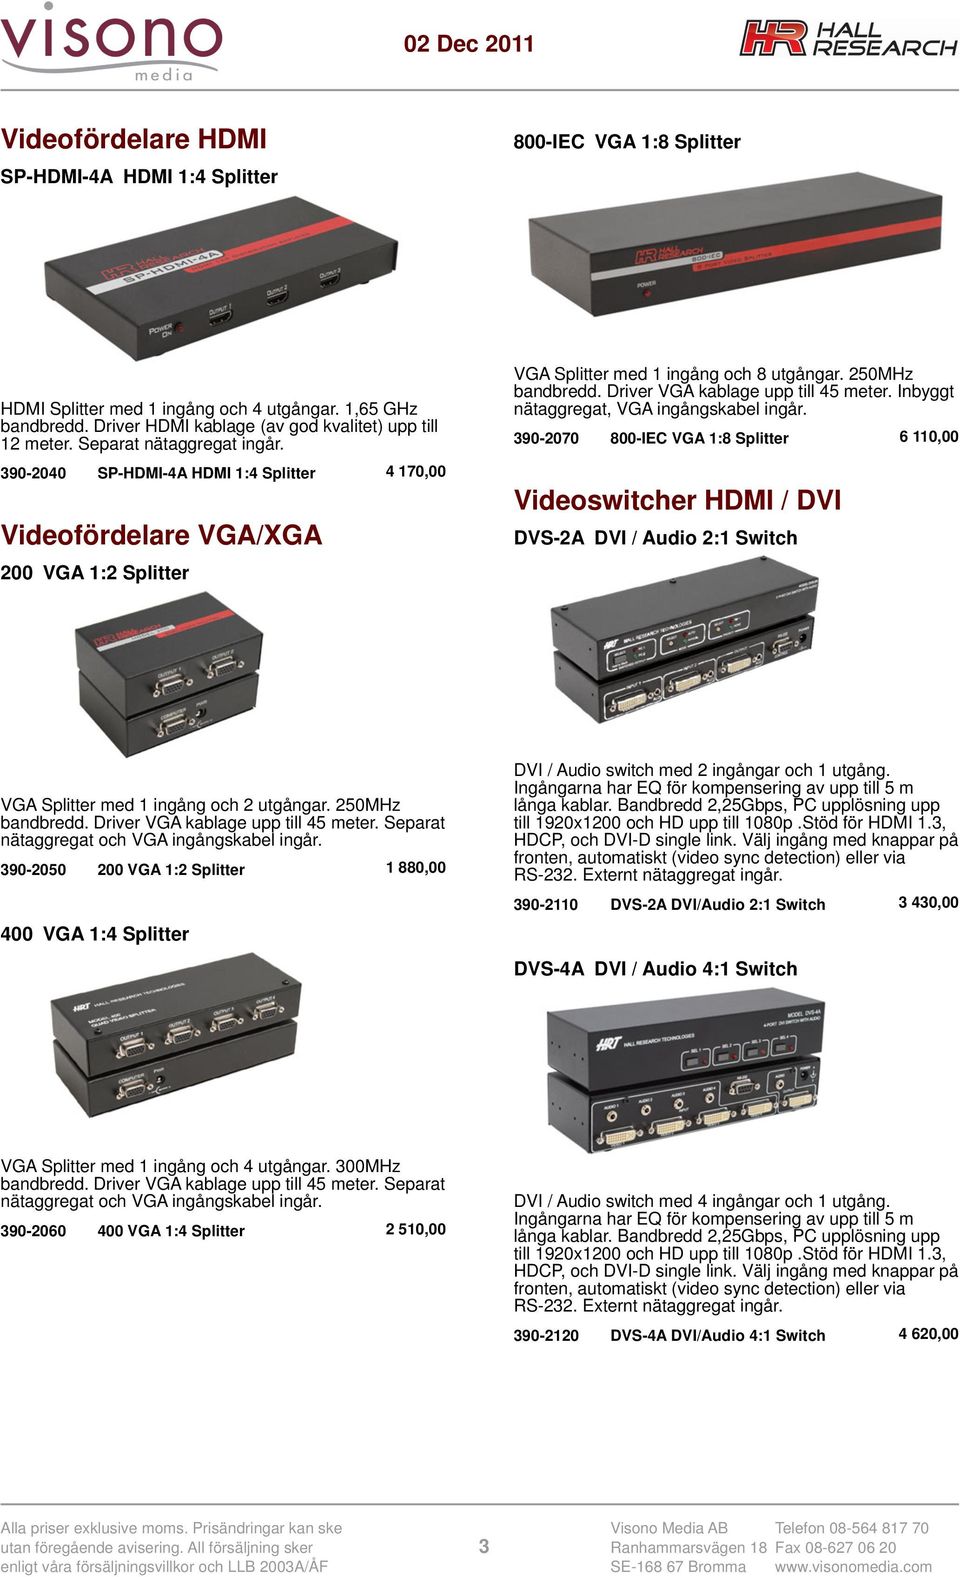 Inbyggt nätaggregat, VGA ingångskabel ingår. 390-2070 800-IEC VGA 1:8 Splitter 6 110,00 Videoswitcher HDMI / DVI DVS-2A DVI / Audio 2:1 Switch VGA Splitter med 1 ingång och 2 utgångar.